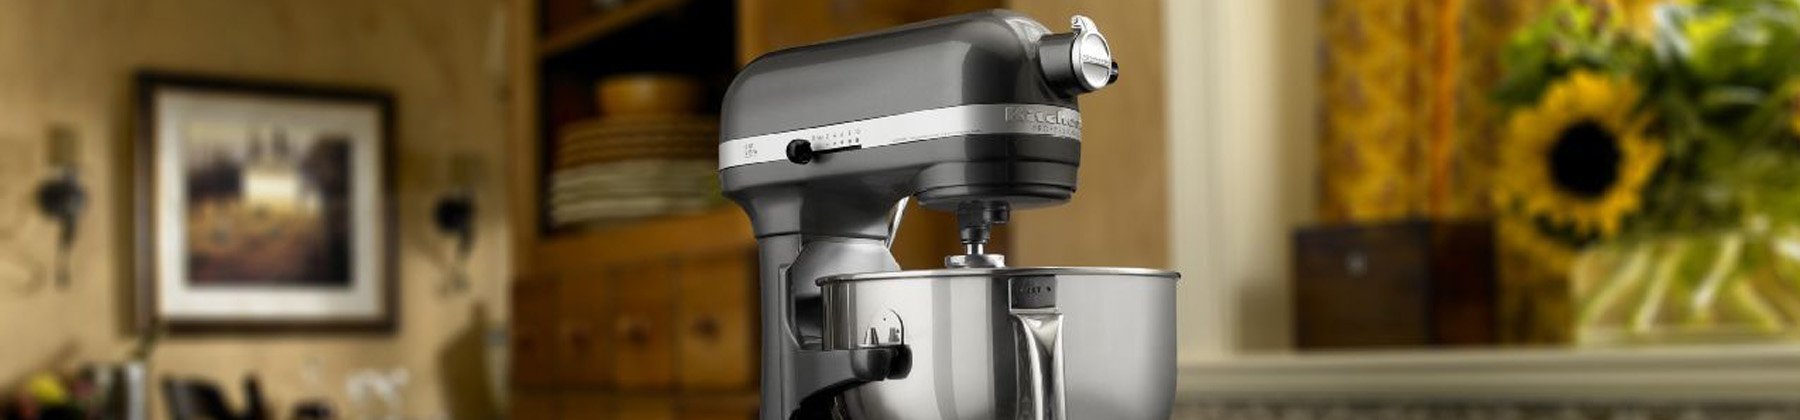 Photo of a KitchenAid 6-Quart Bowl-Lift Stand Mixer on a countertop.